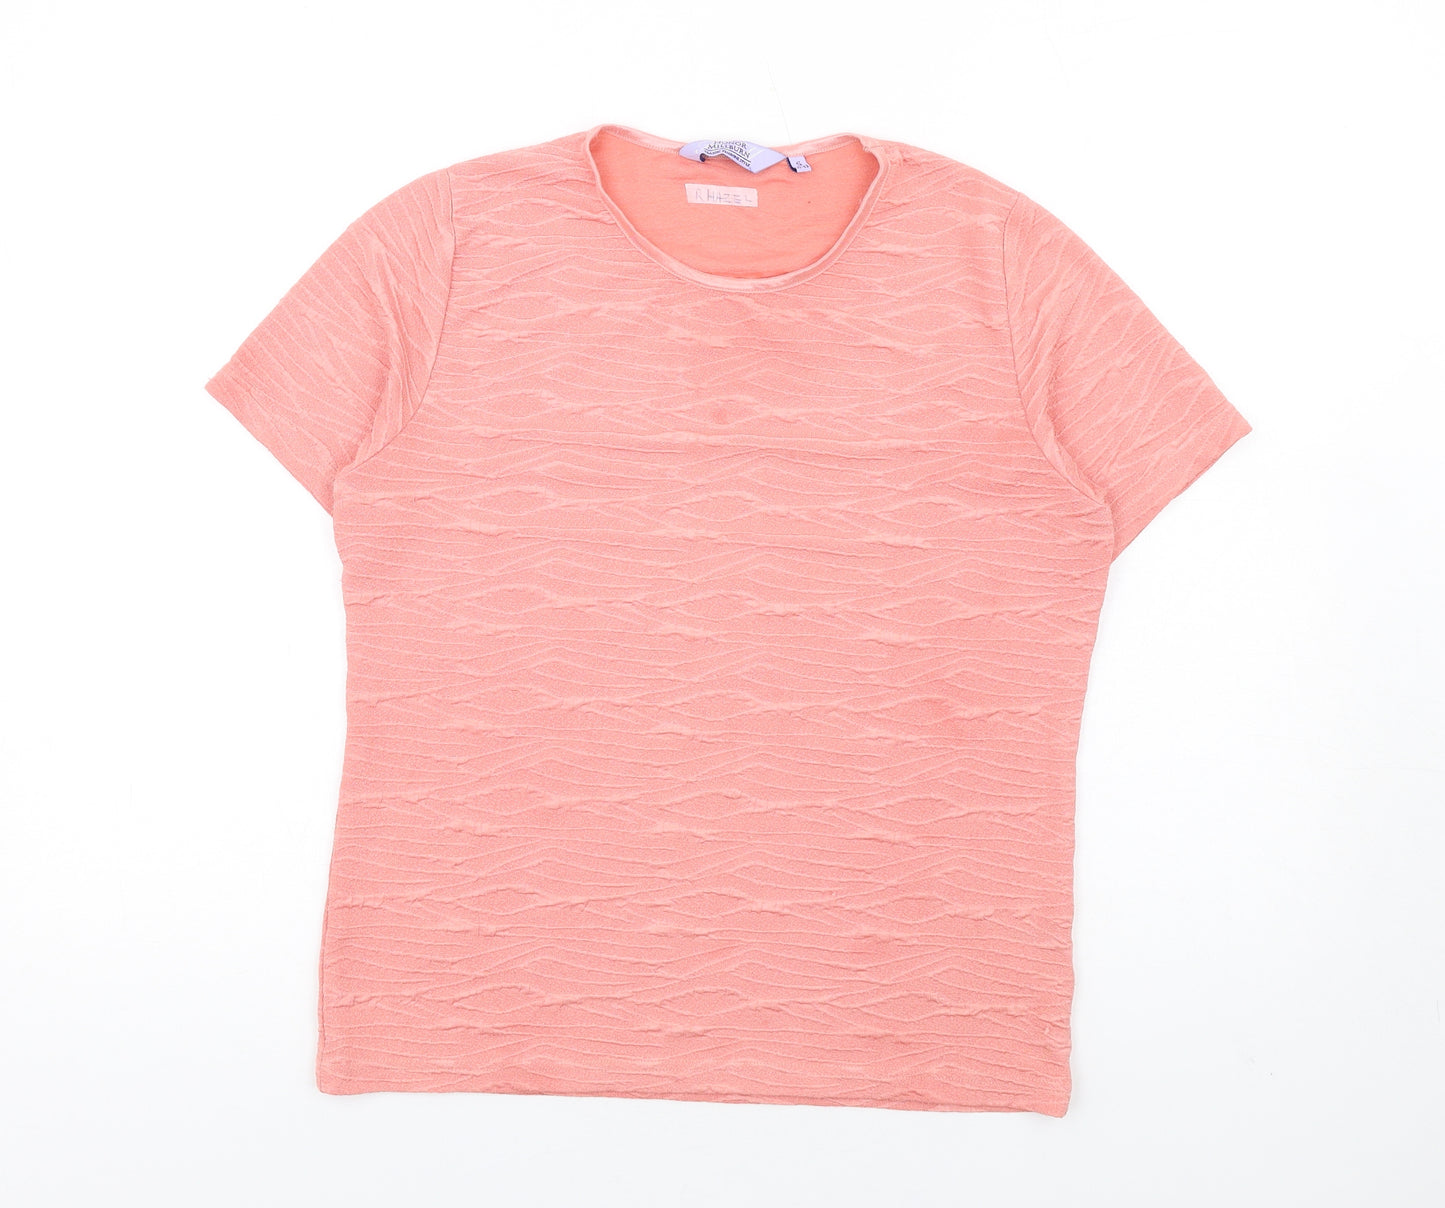 EWM Womens Pink Polyester Basic T-Shirt Size S Round Neck